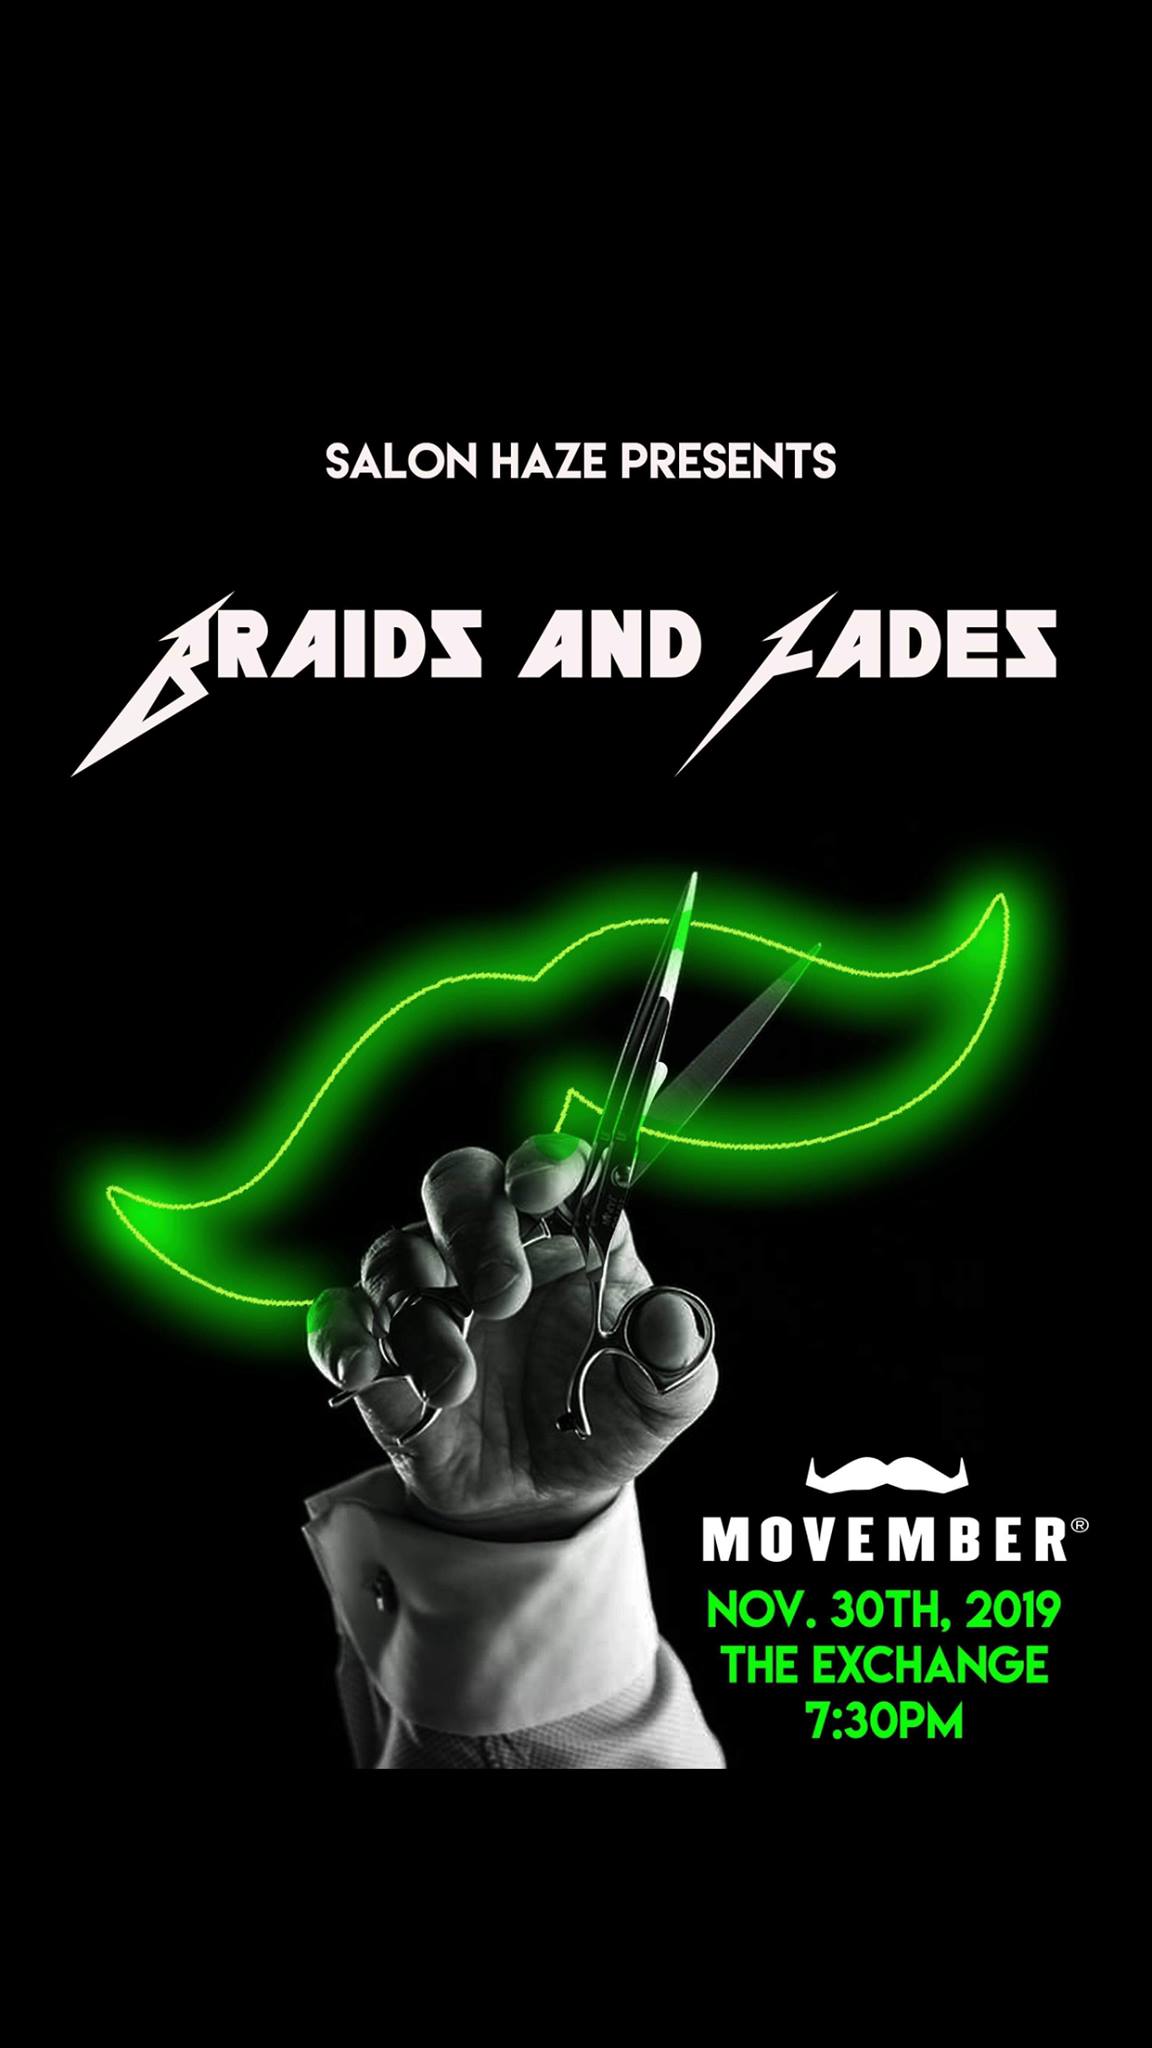 Salon Haze Presents Braids and Fades